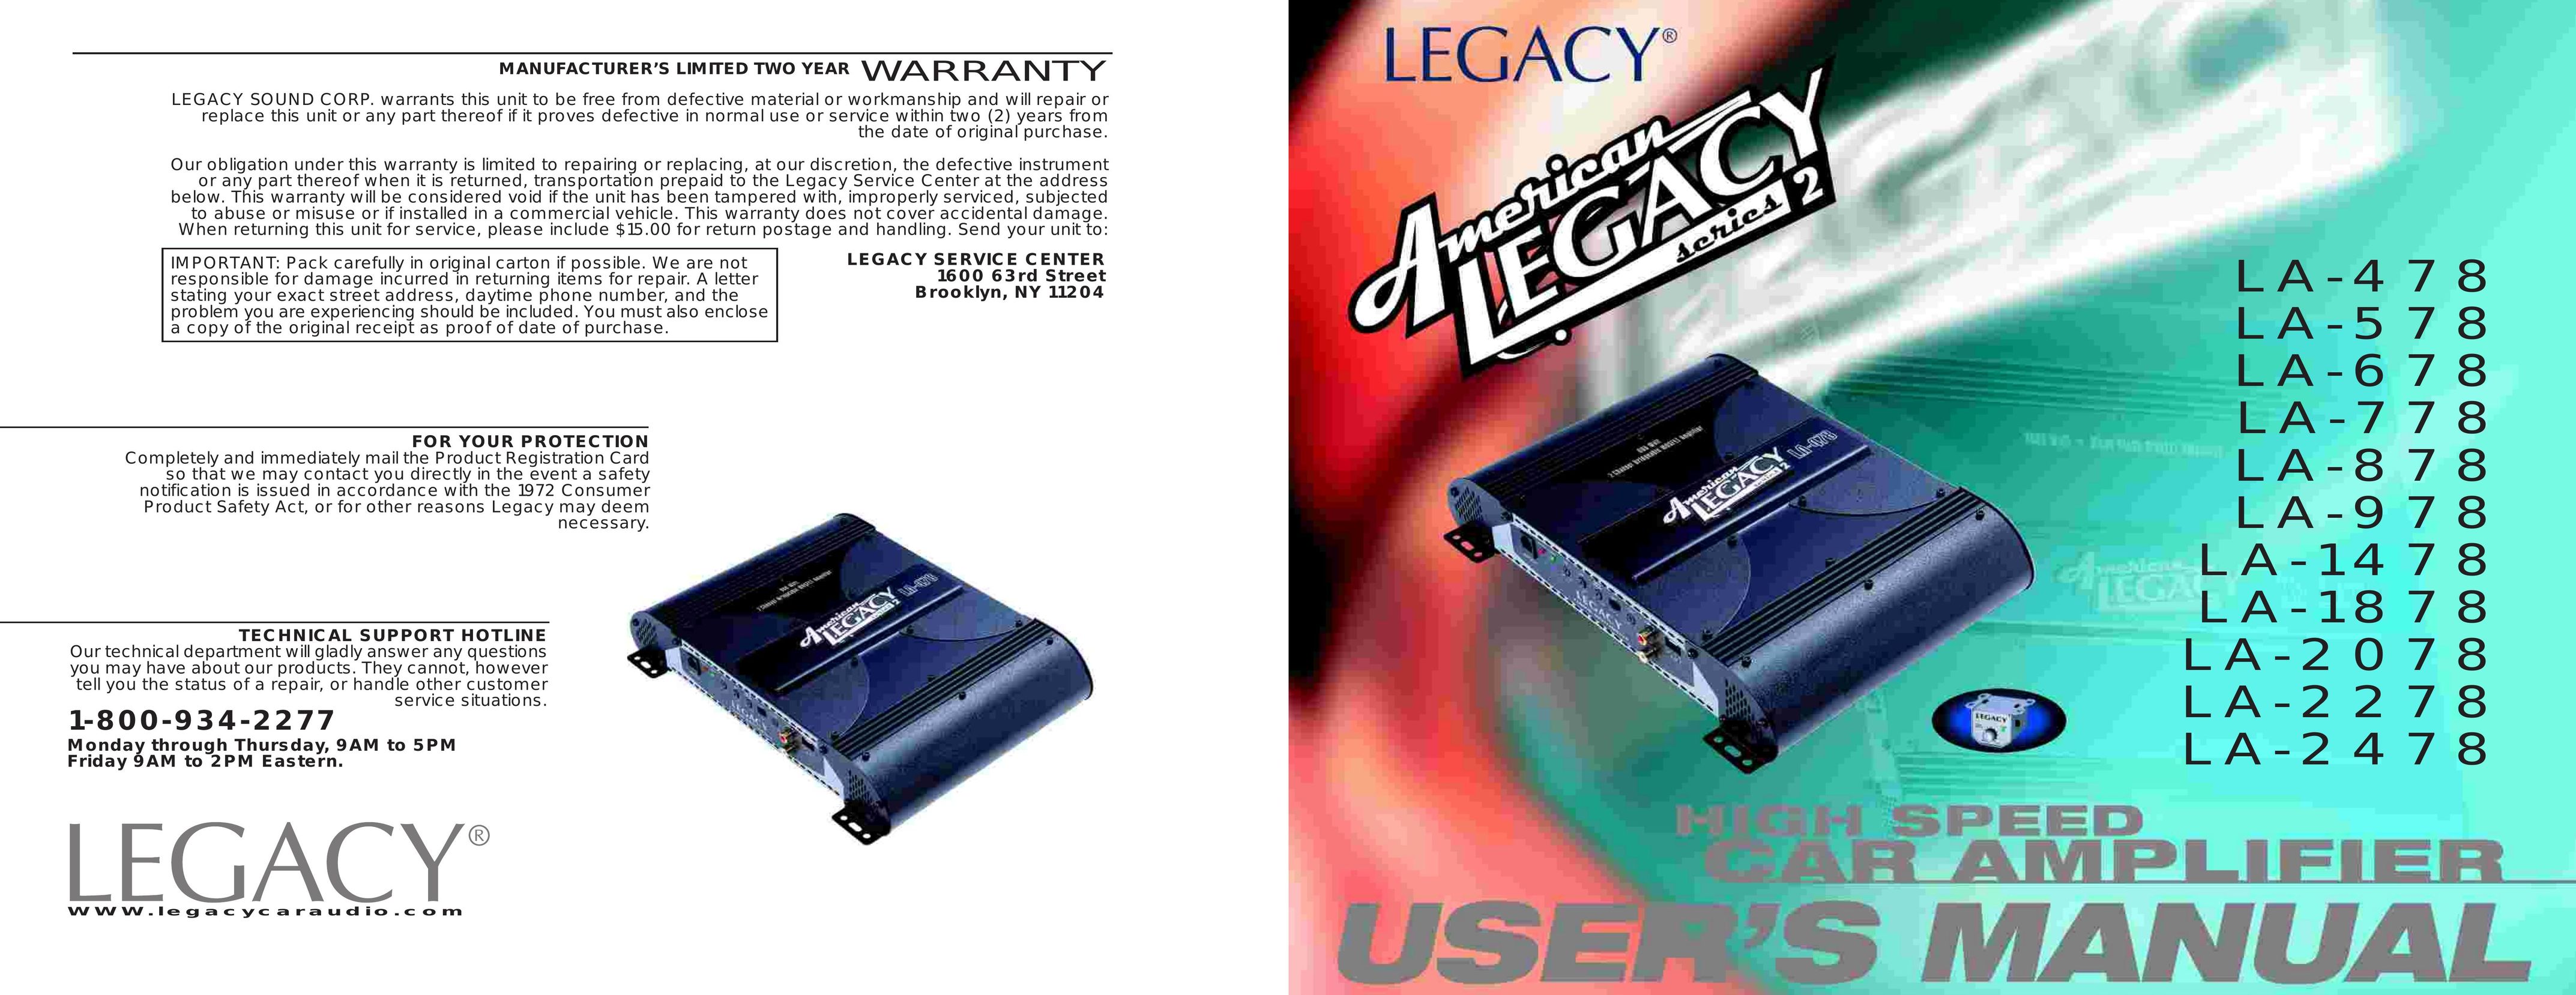 Legacy Car Audio LA-478 Car Amplifier User Manual